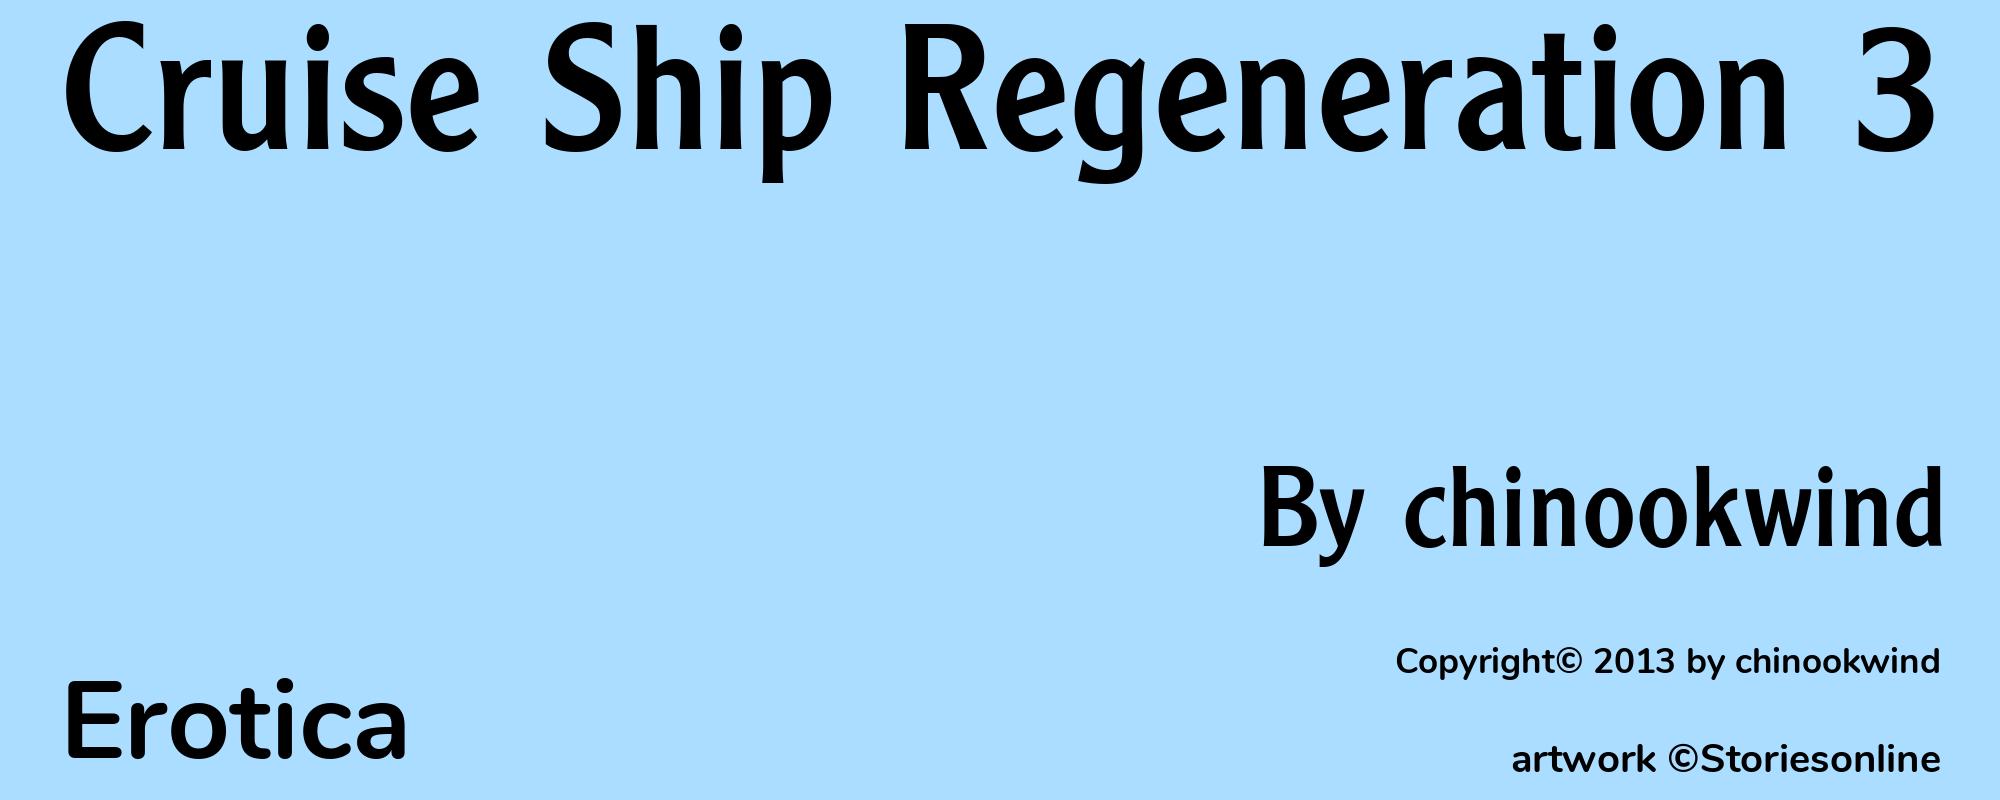 Cruise Ship Regeneration 3 - Cover